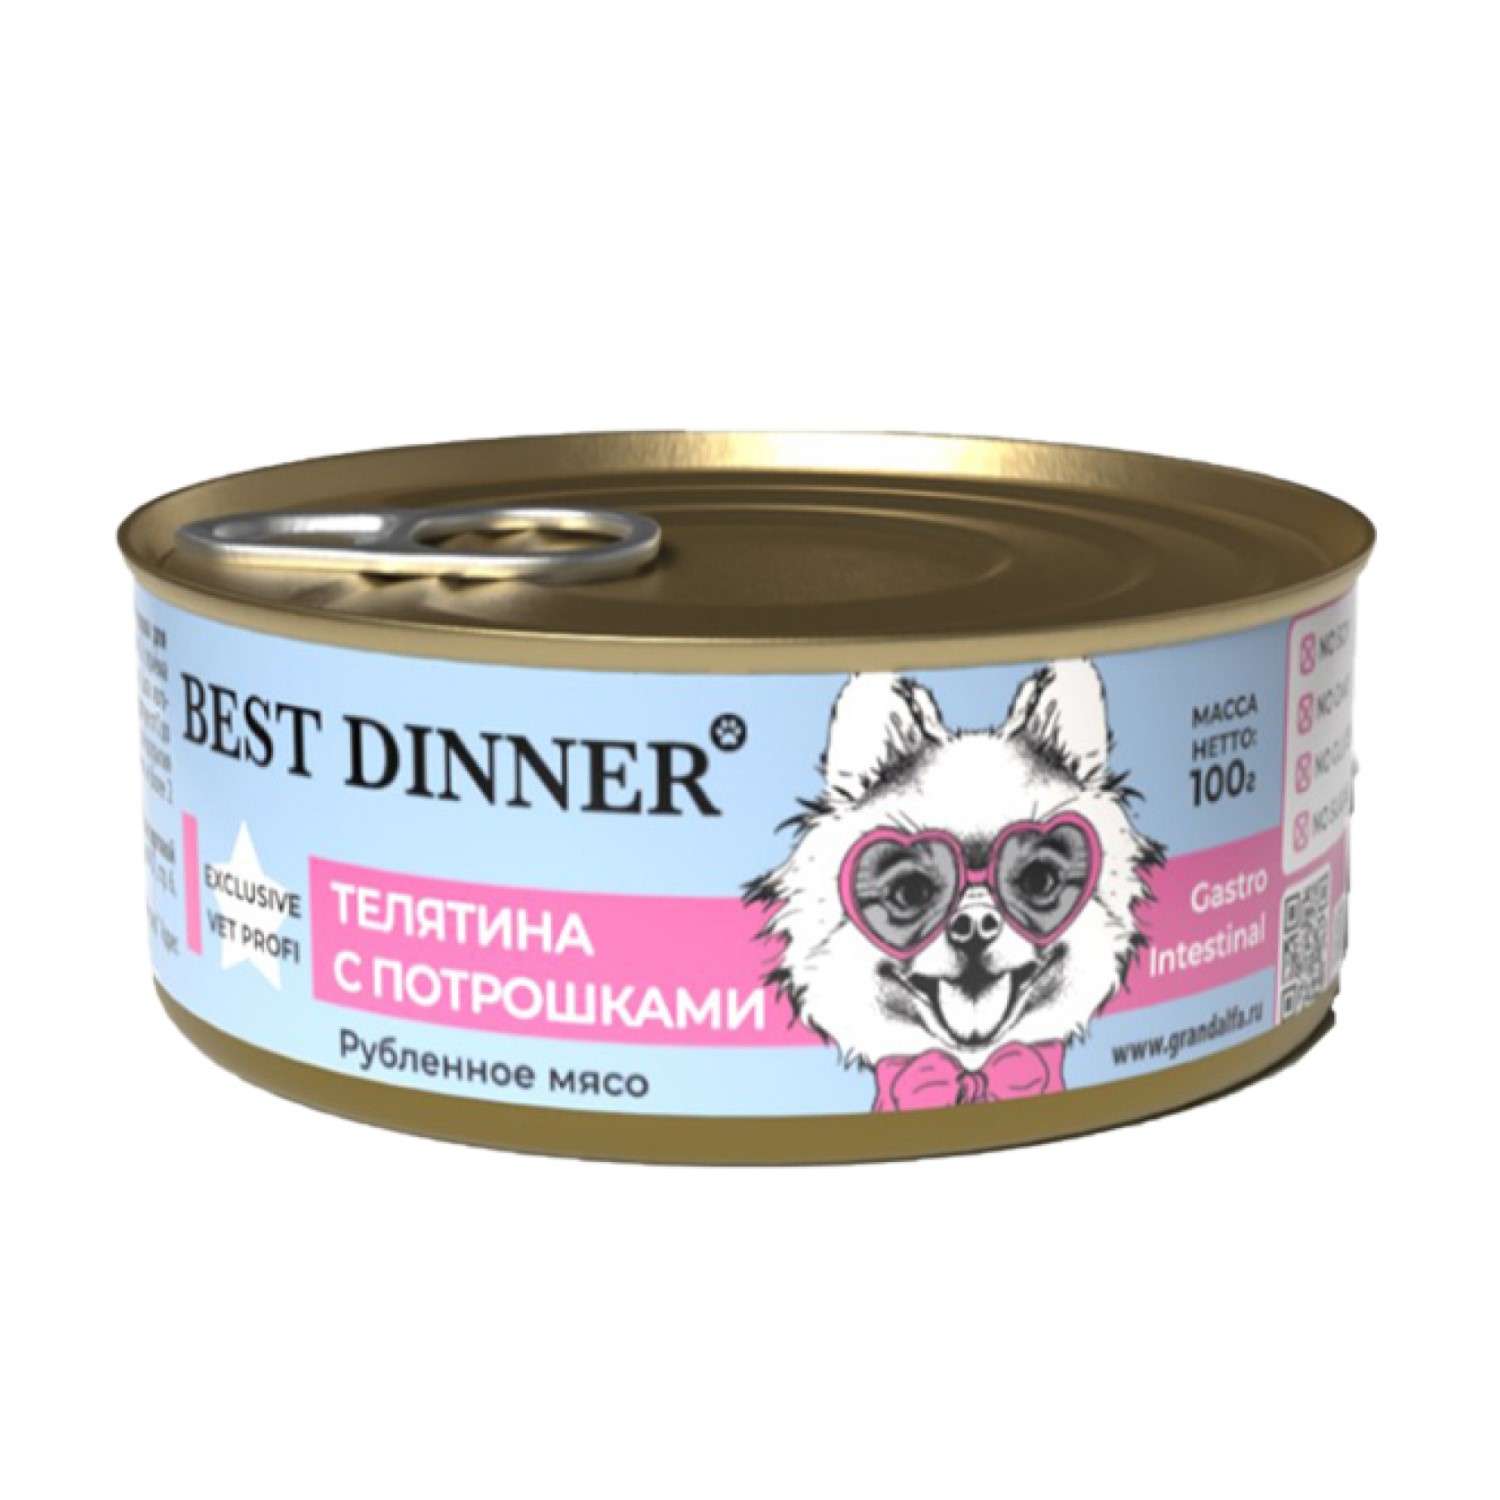 Корм для собак Best Dinner 0.1кг Exclusive Vet Profi Gastro Intestinal телятина с потрошками - фото 1